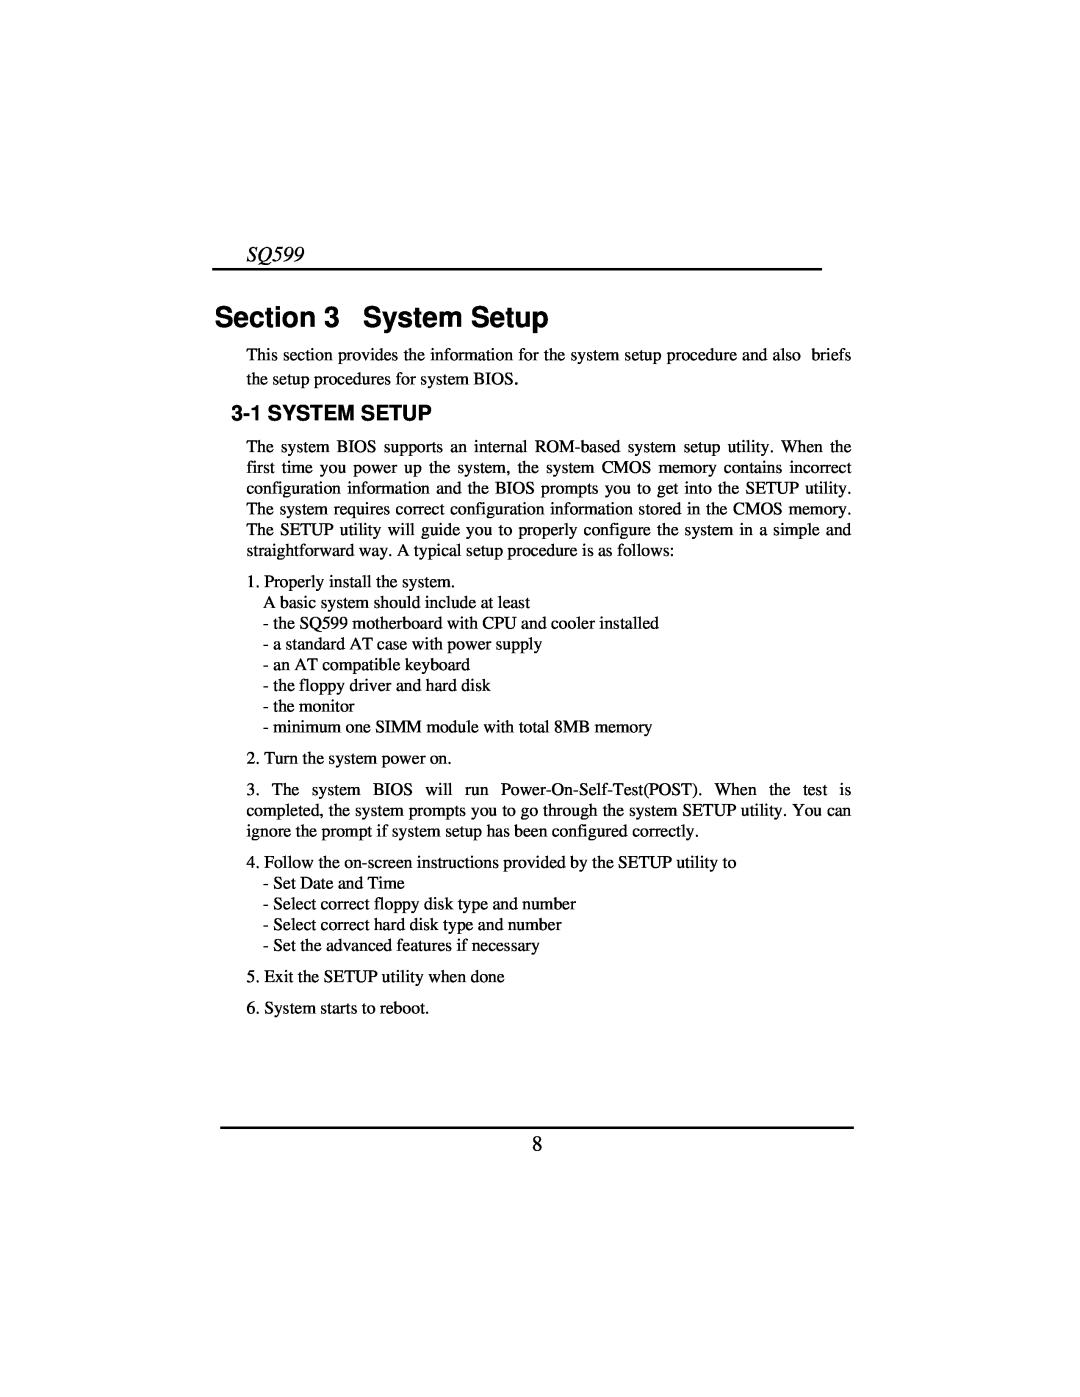 Intel SQ599 manual System Setup, 3-1SYSTEM SETUP 